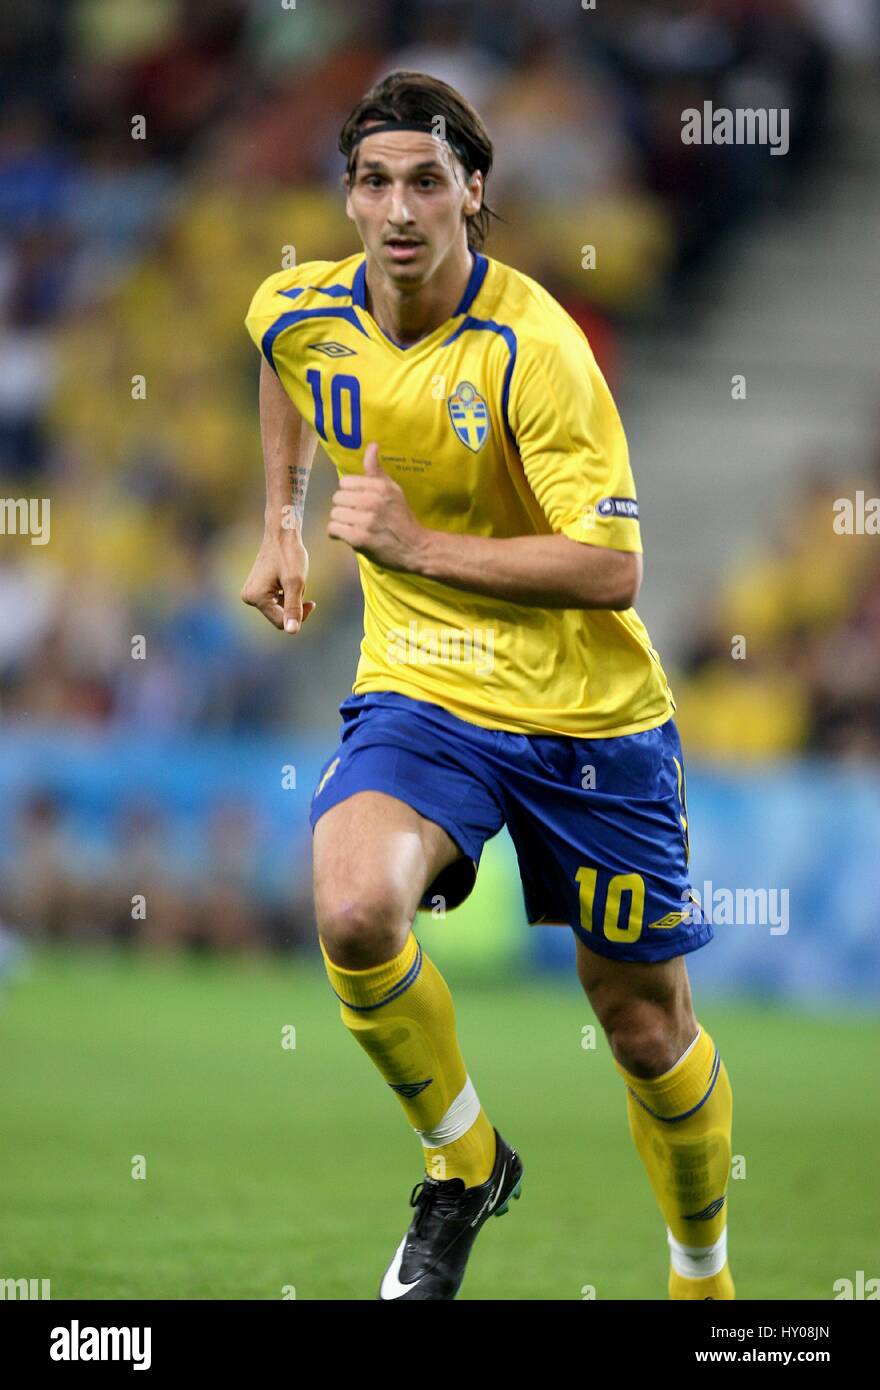 Zlatan ibrahimovic sweden inter milan hi-res stock photography and images -  Alamy